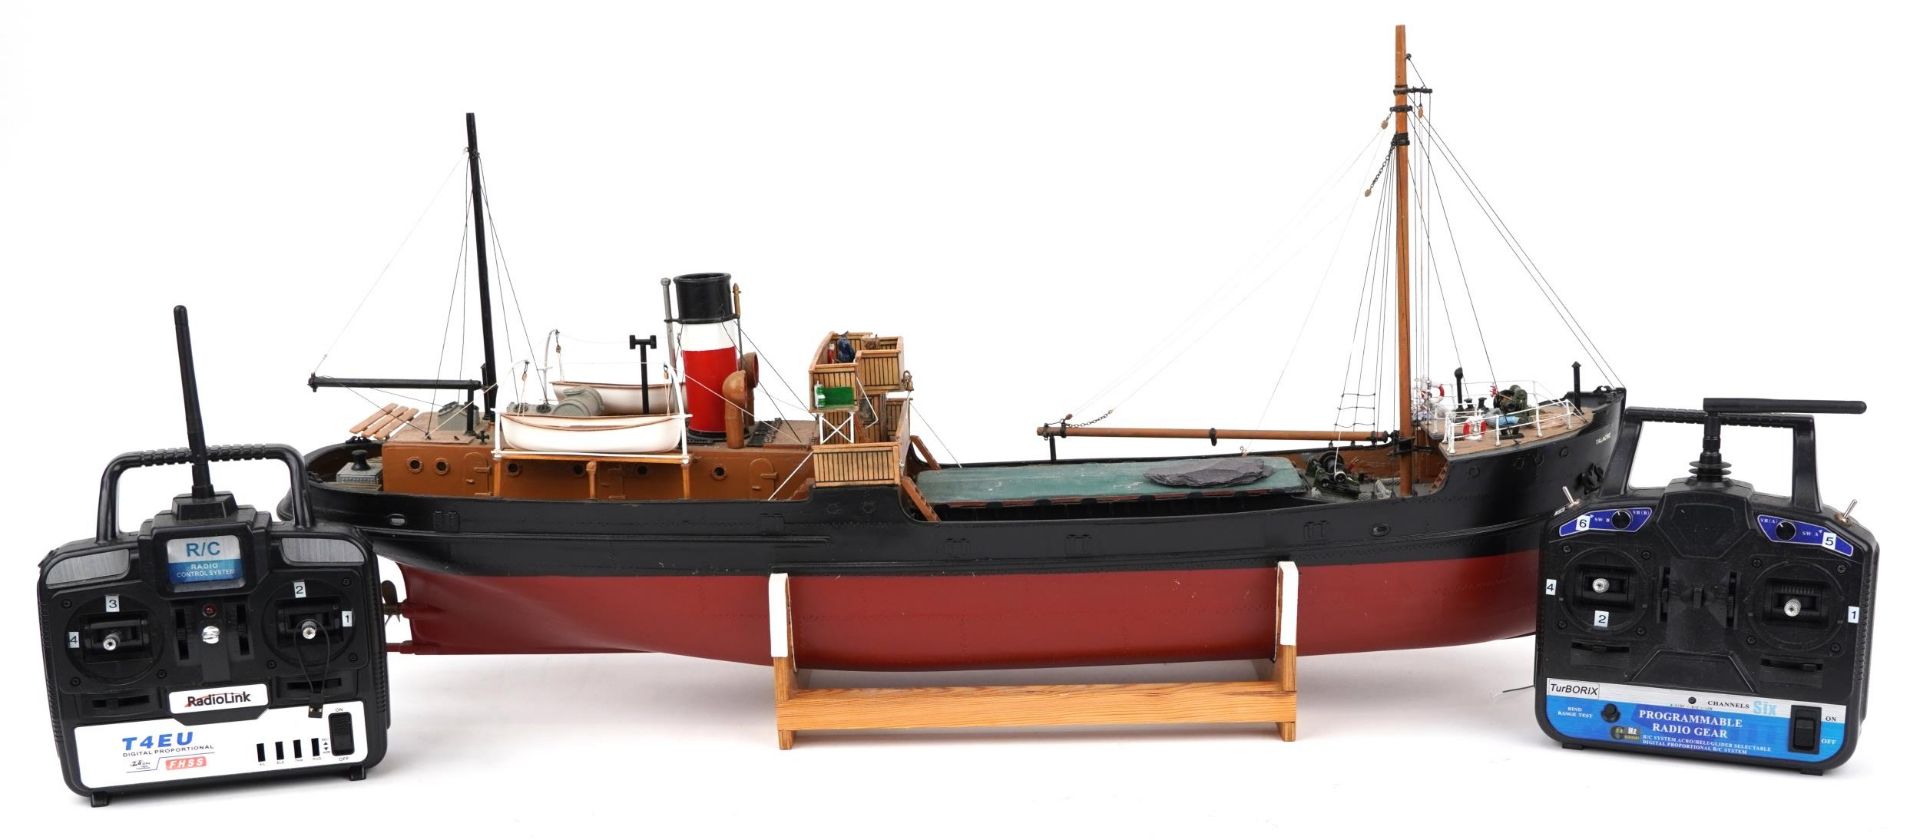 Large scratch built radio model Talicre Coaster pond boat with remote control by Caldercraft, 85cm - Bild 2 aus 4